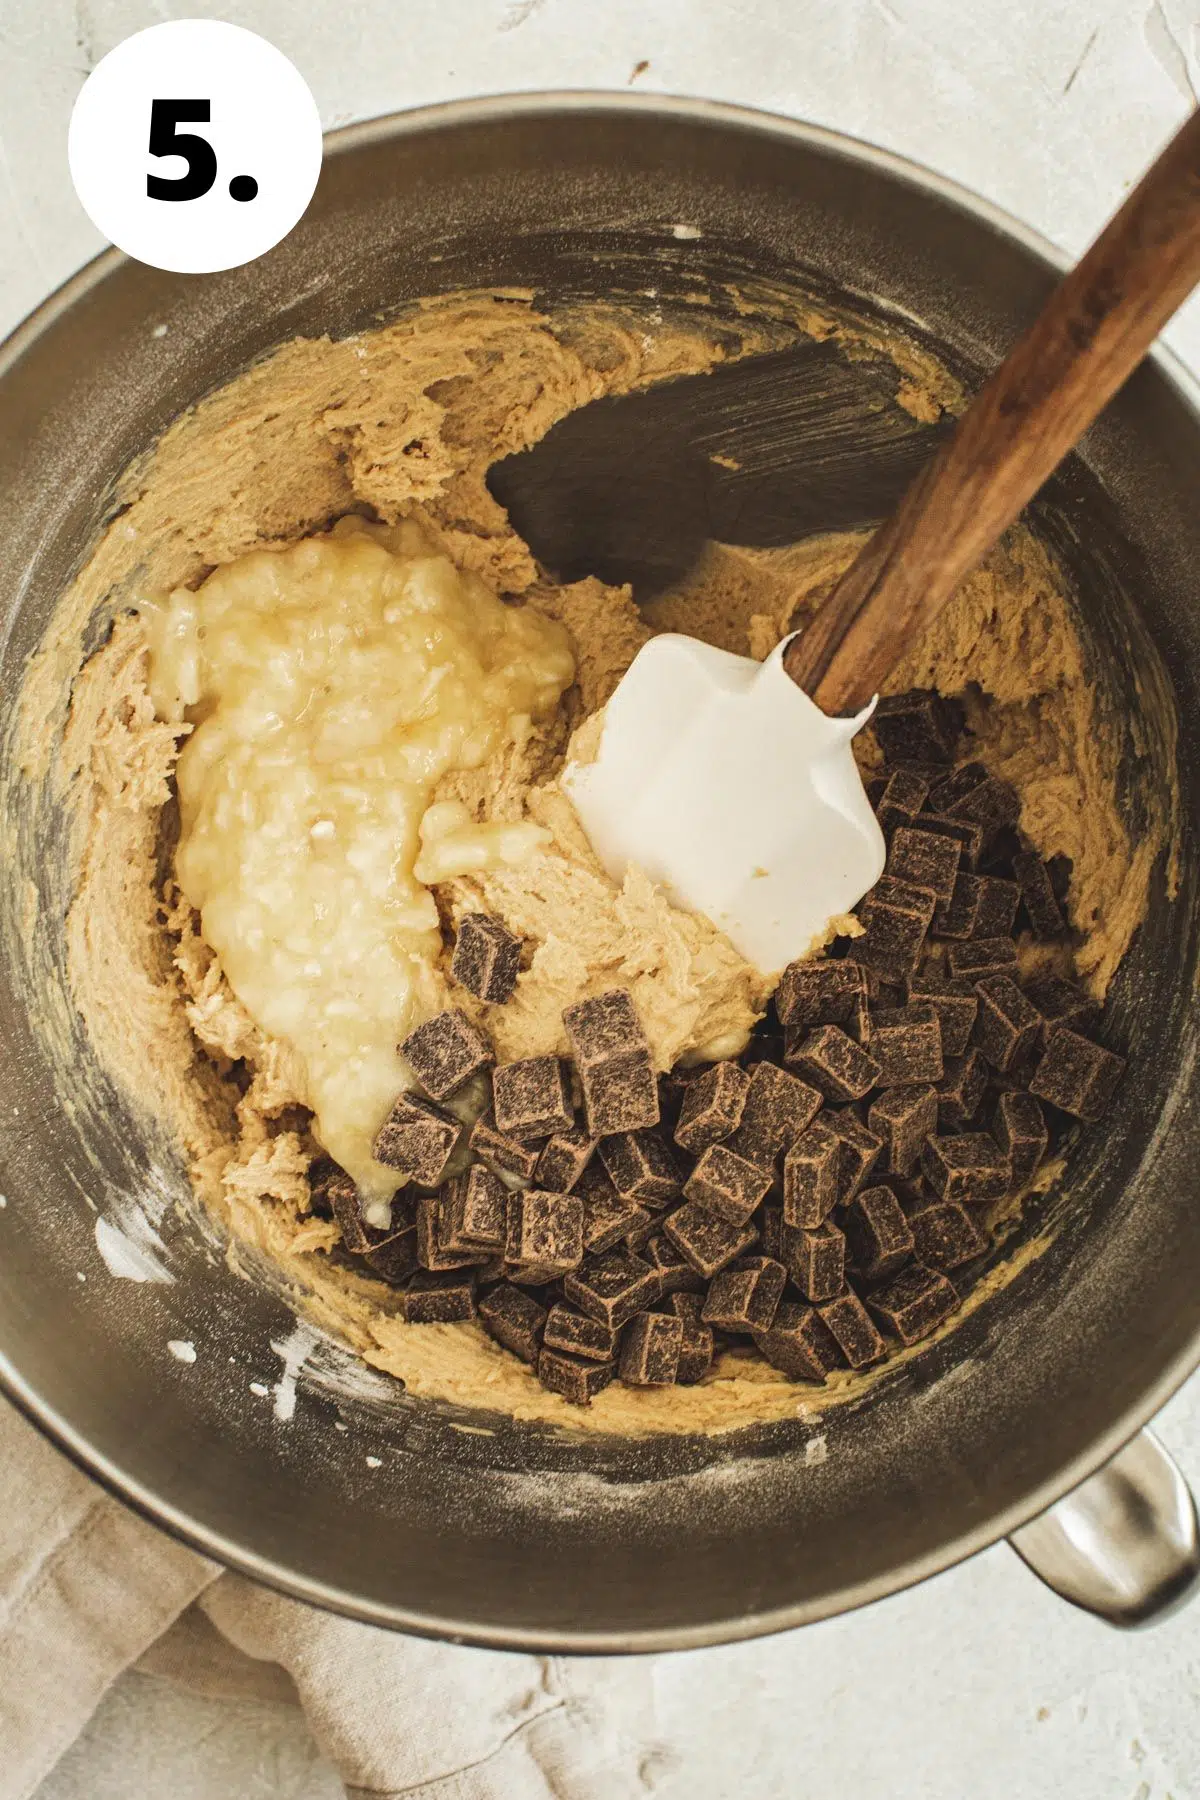 Chocolate chip banana cookies process step 5.